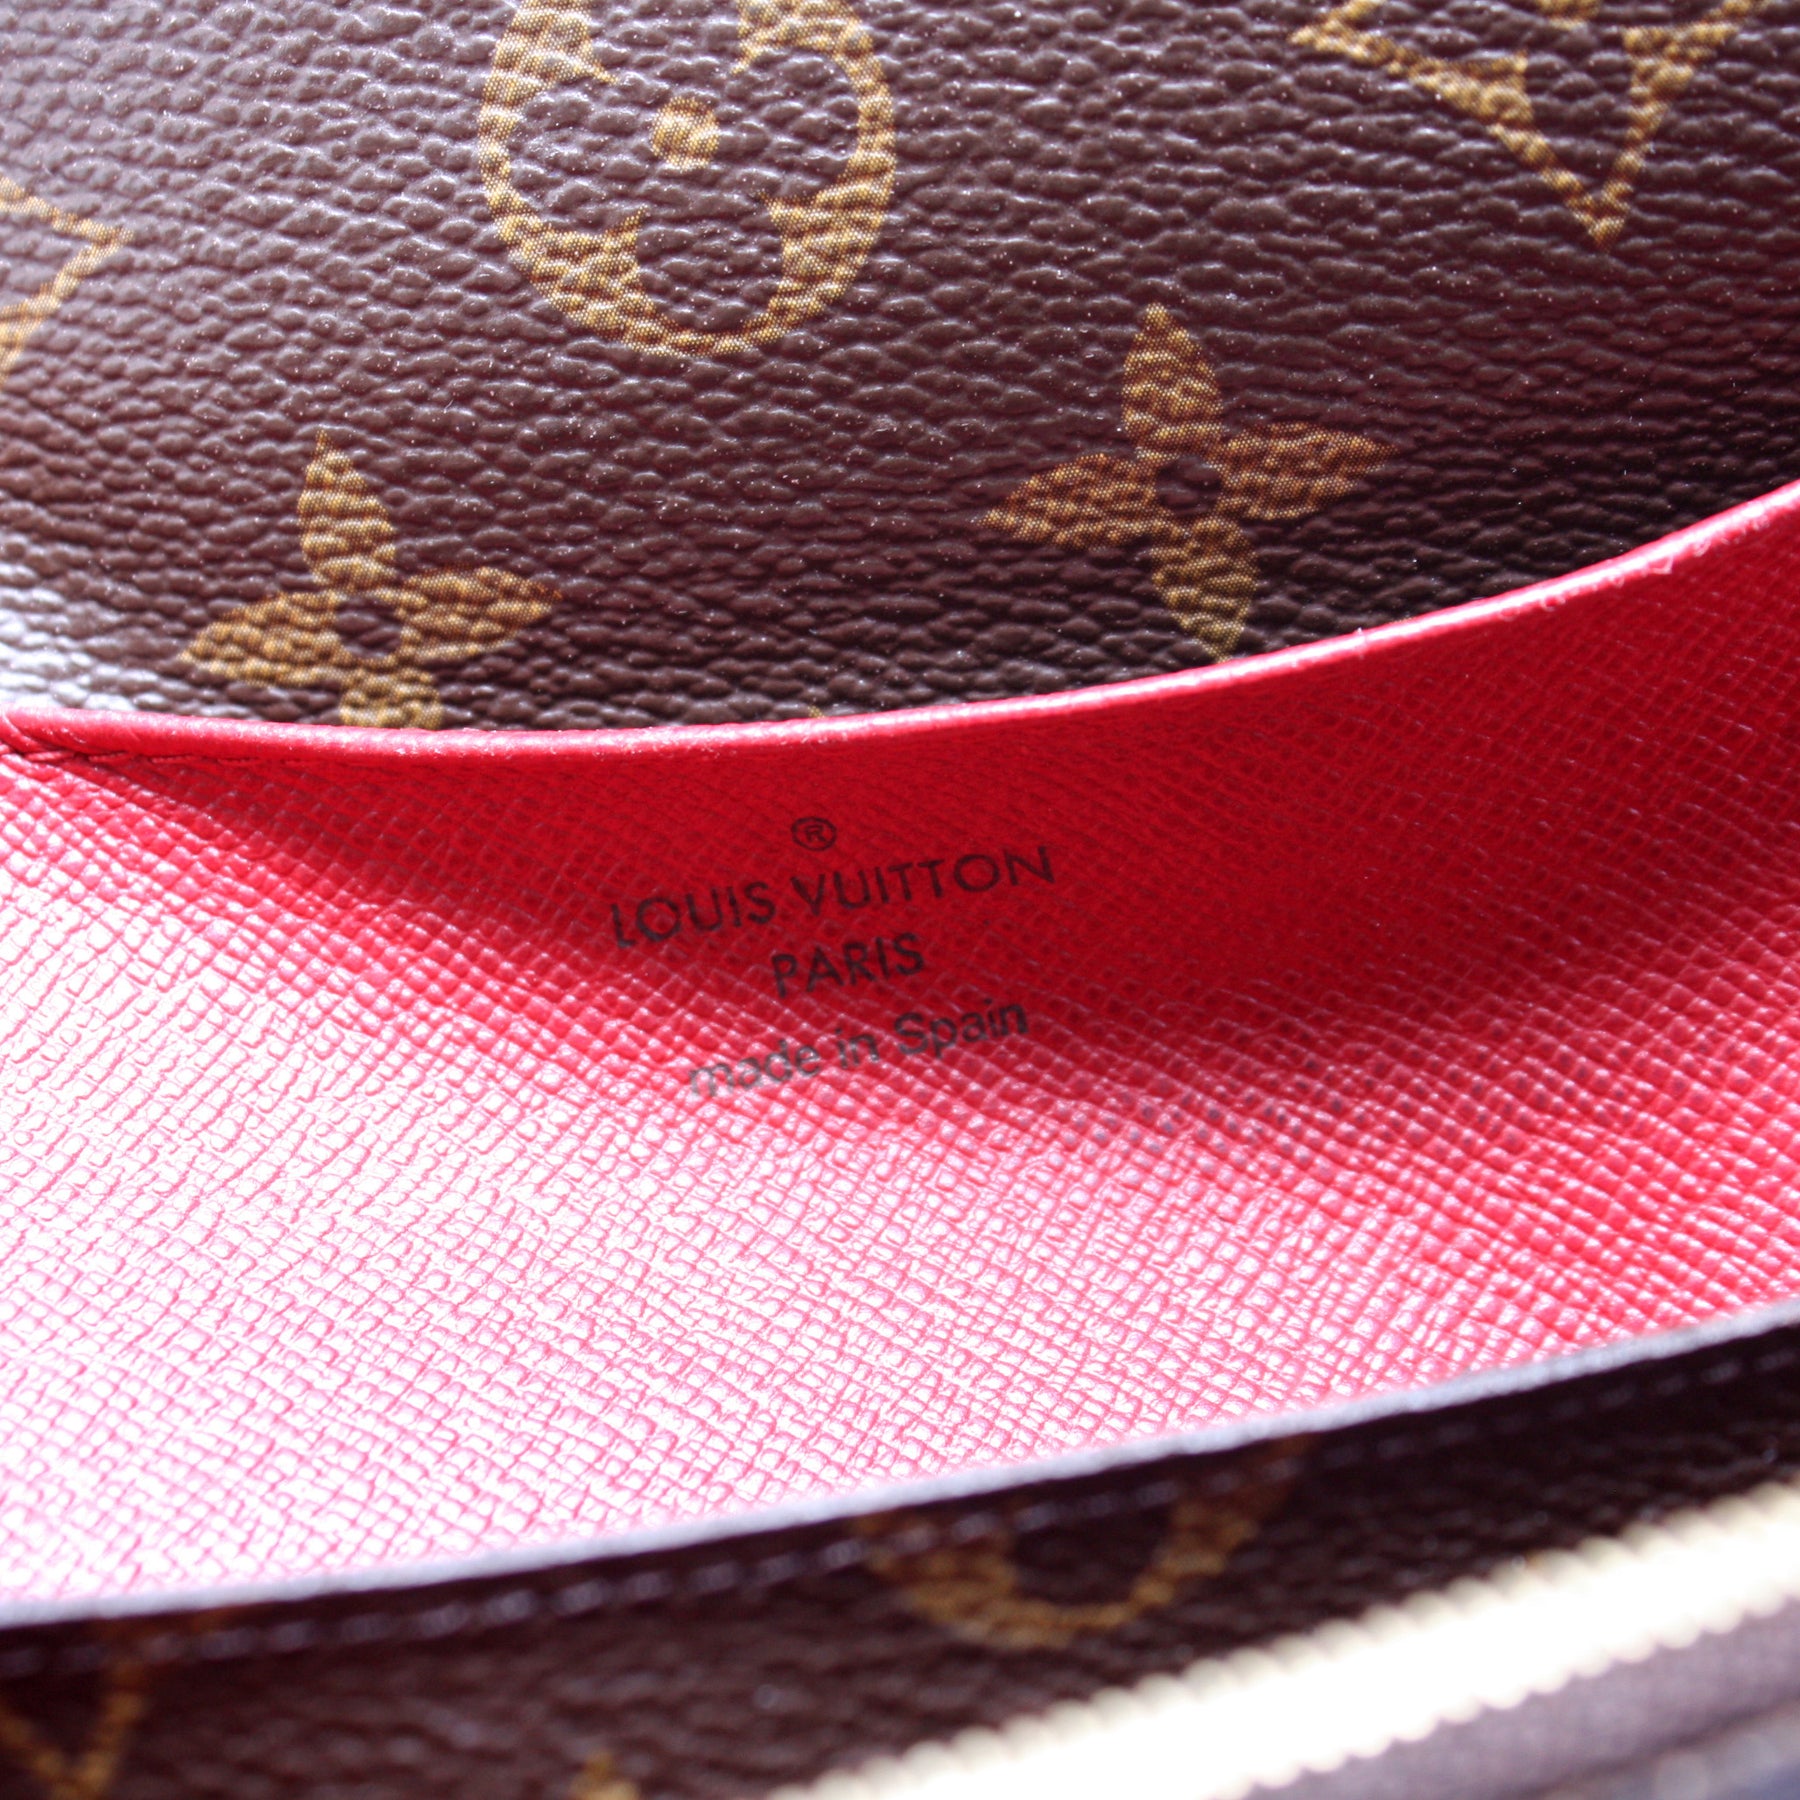 Louis Vuitton - Authenticated Emilie Wallet - Leather Black for Women, Never Worn